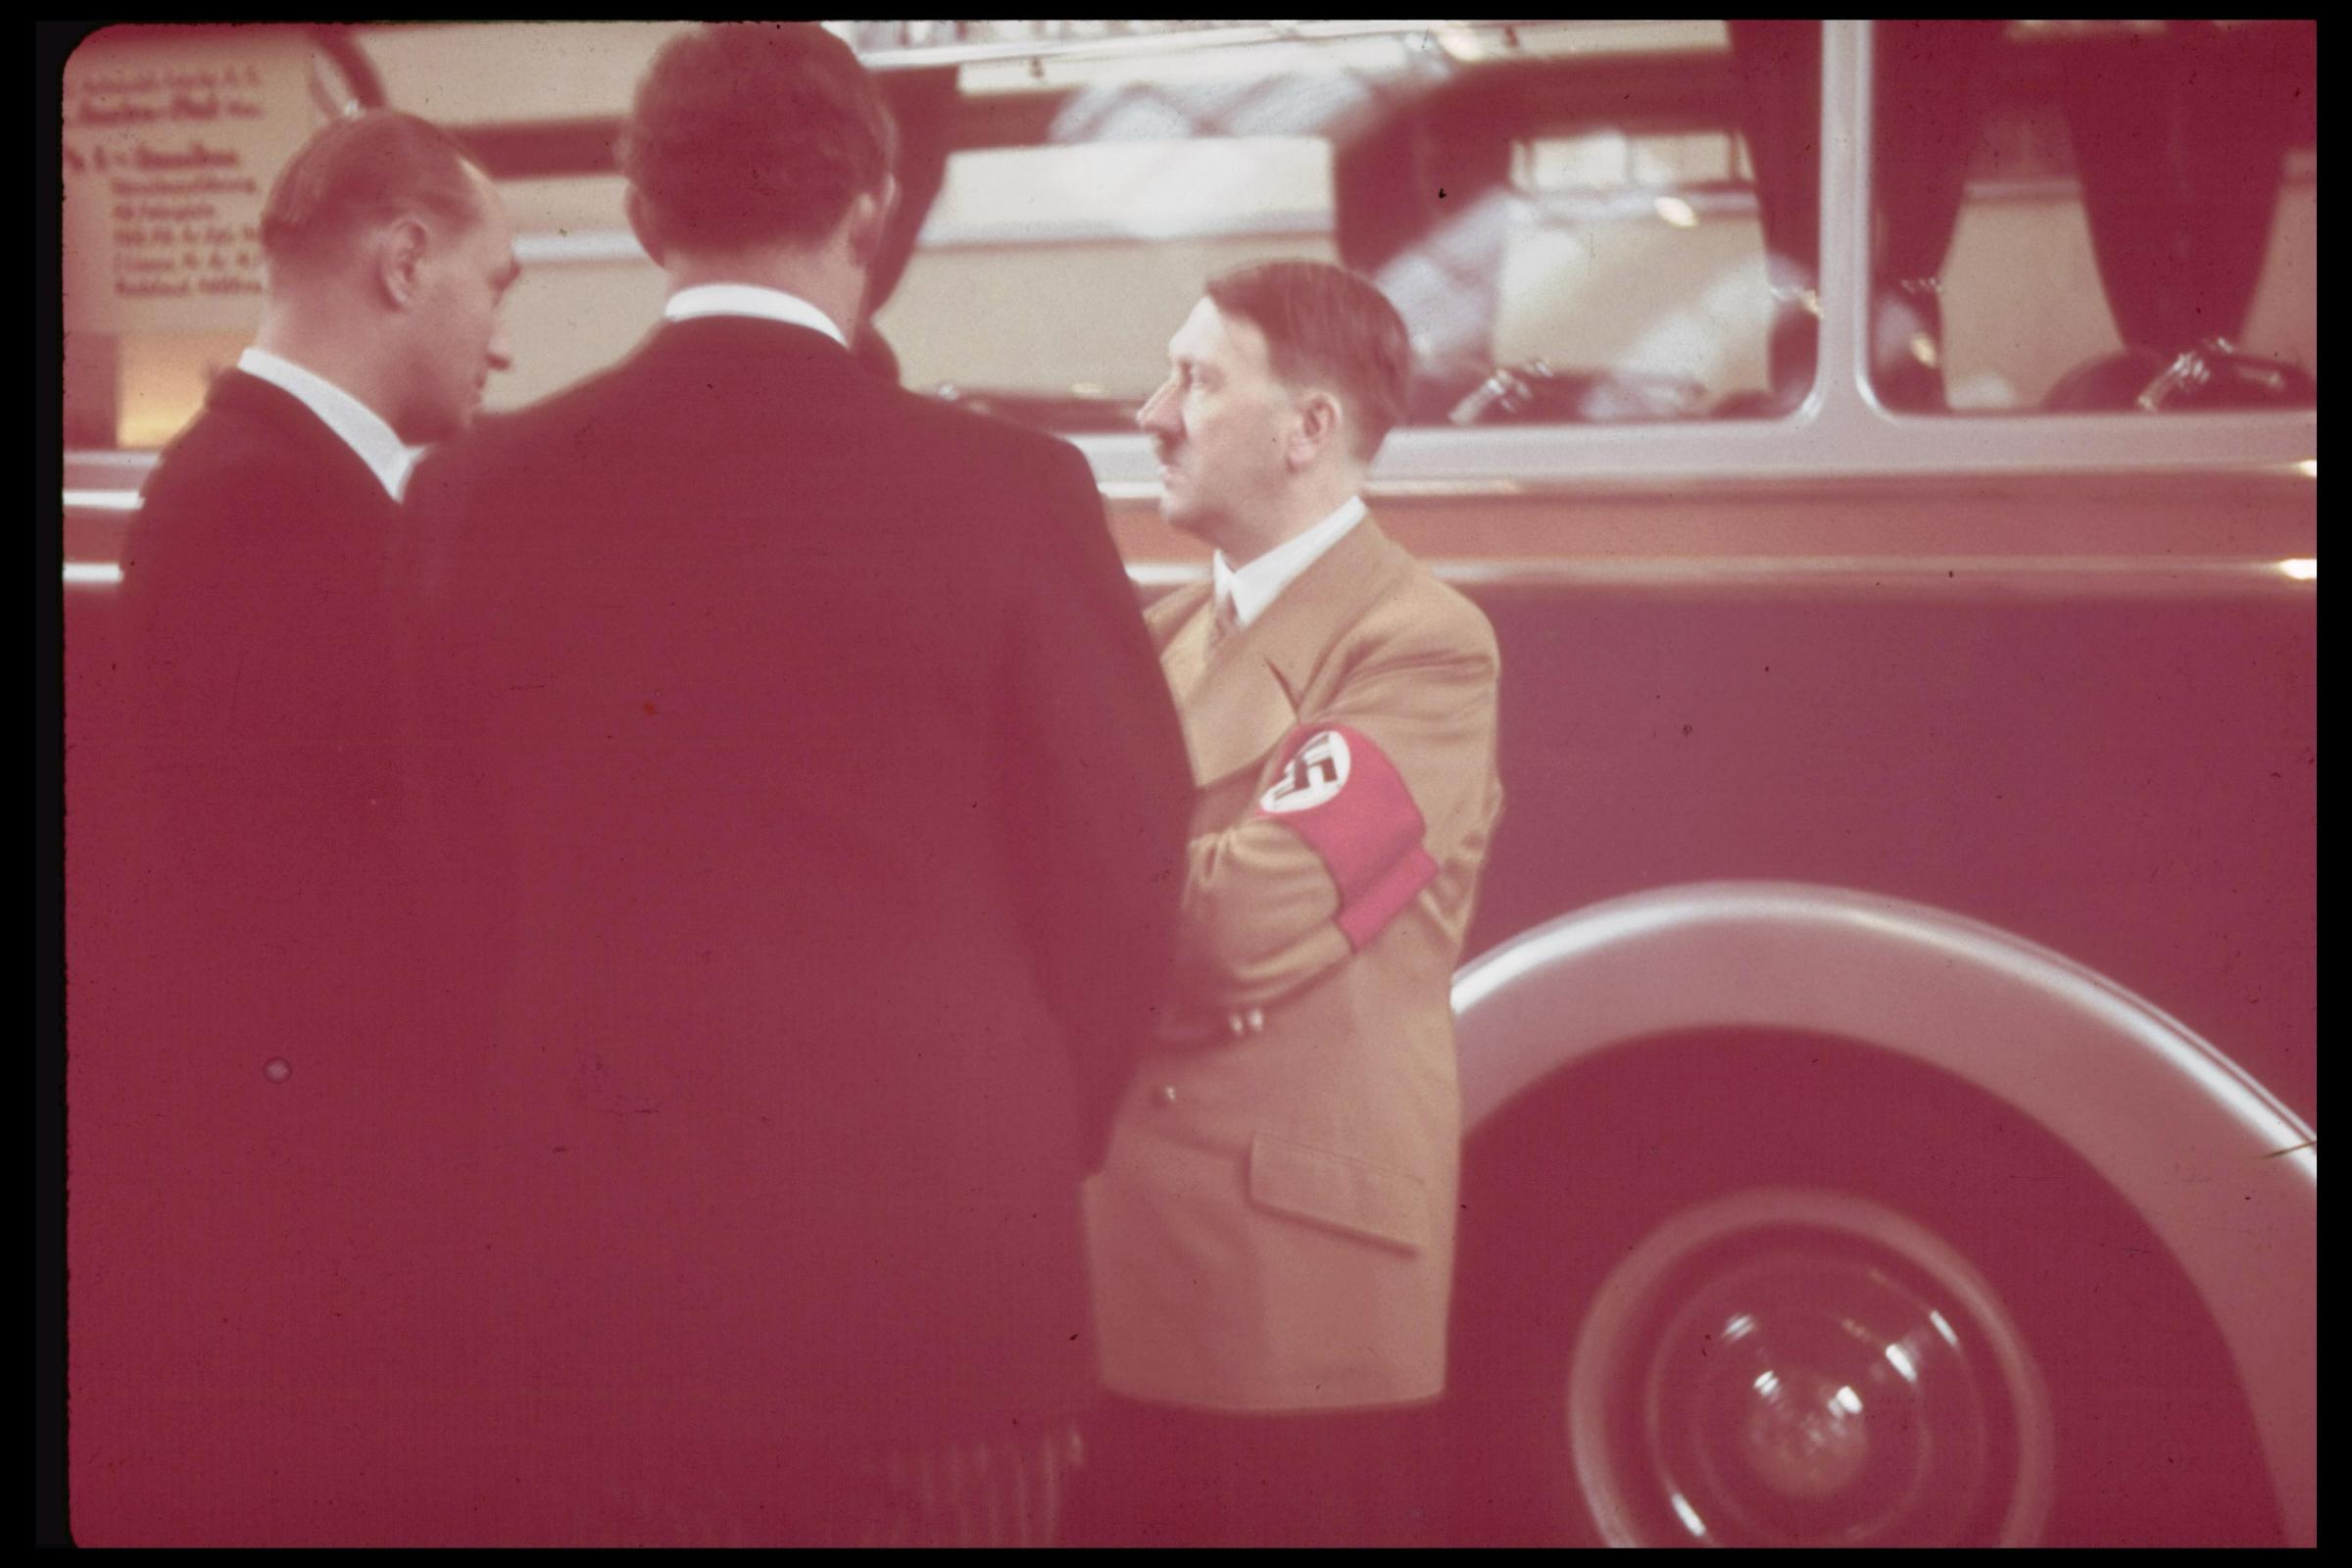 Adolf Hitler at the 1939 International Auto Exhibition in Berlin.